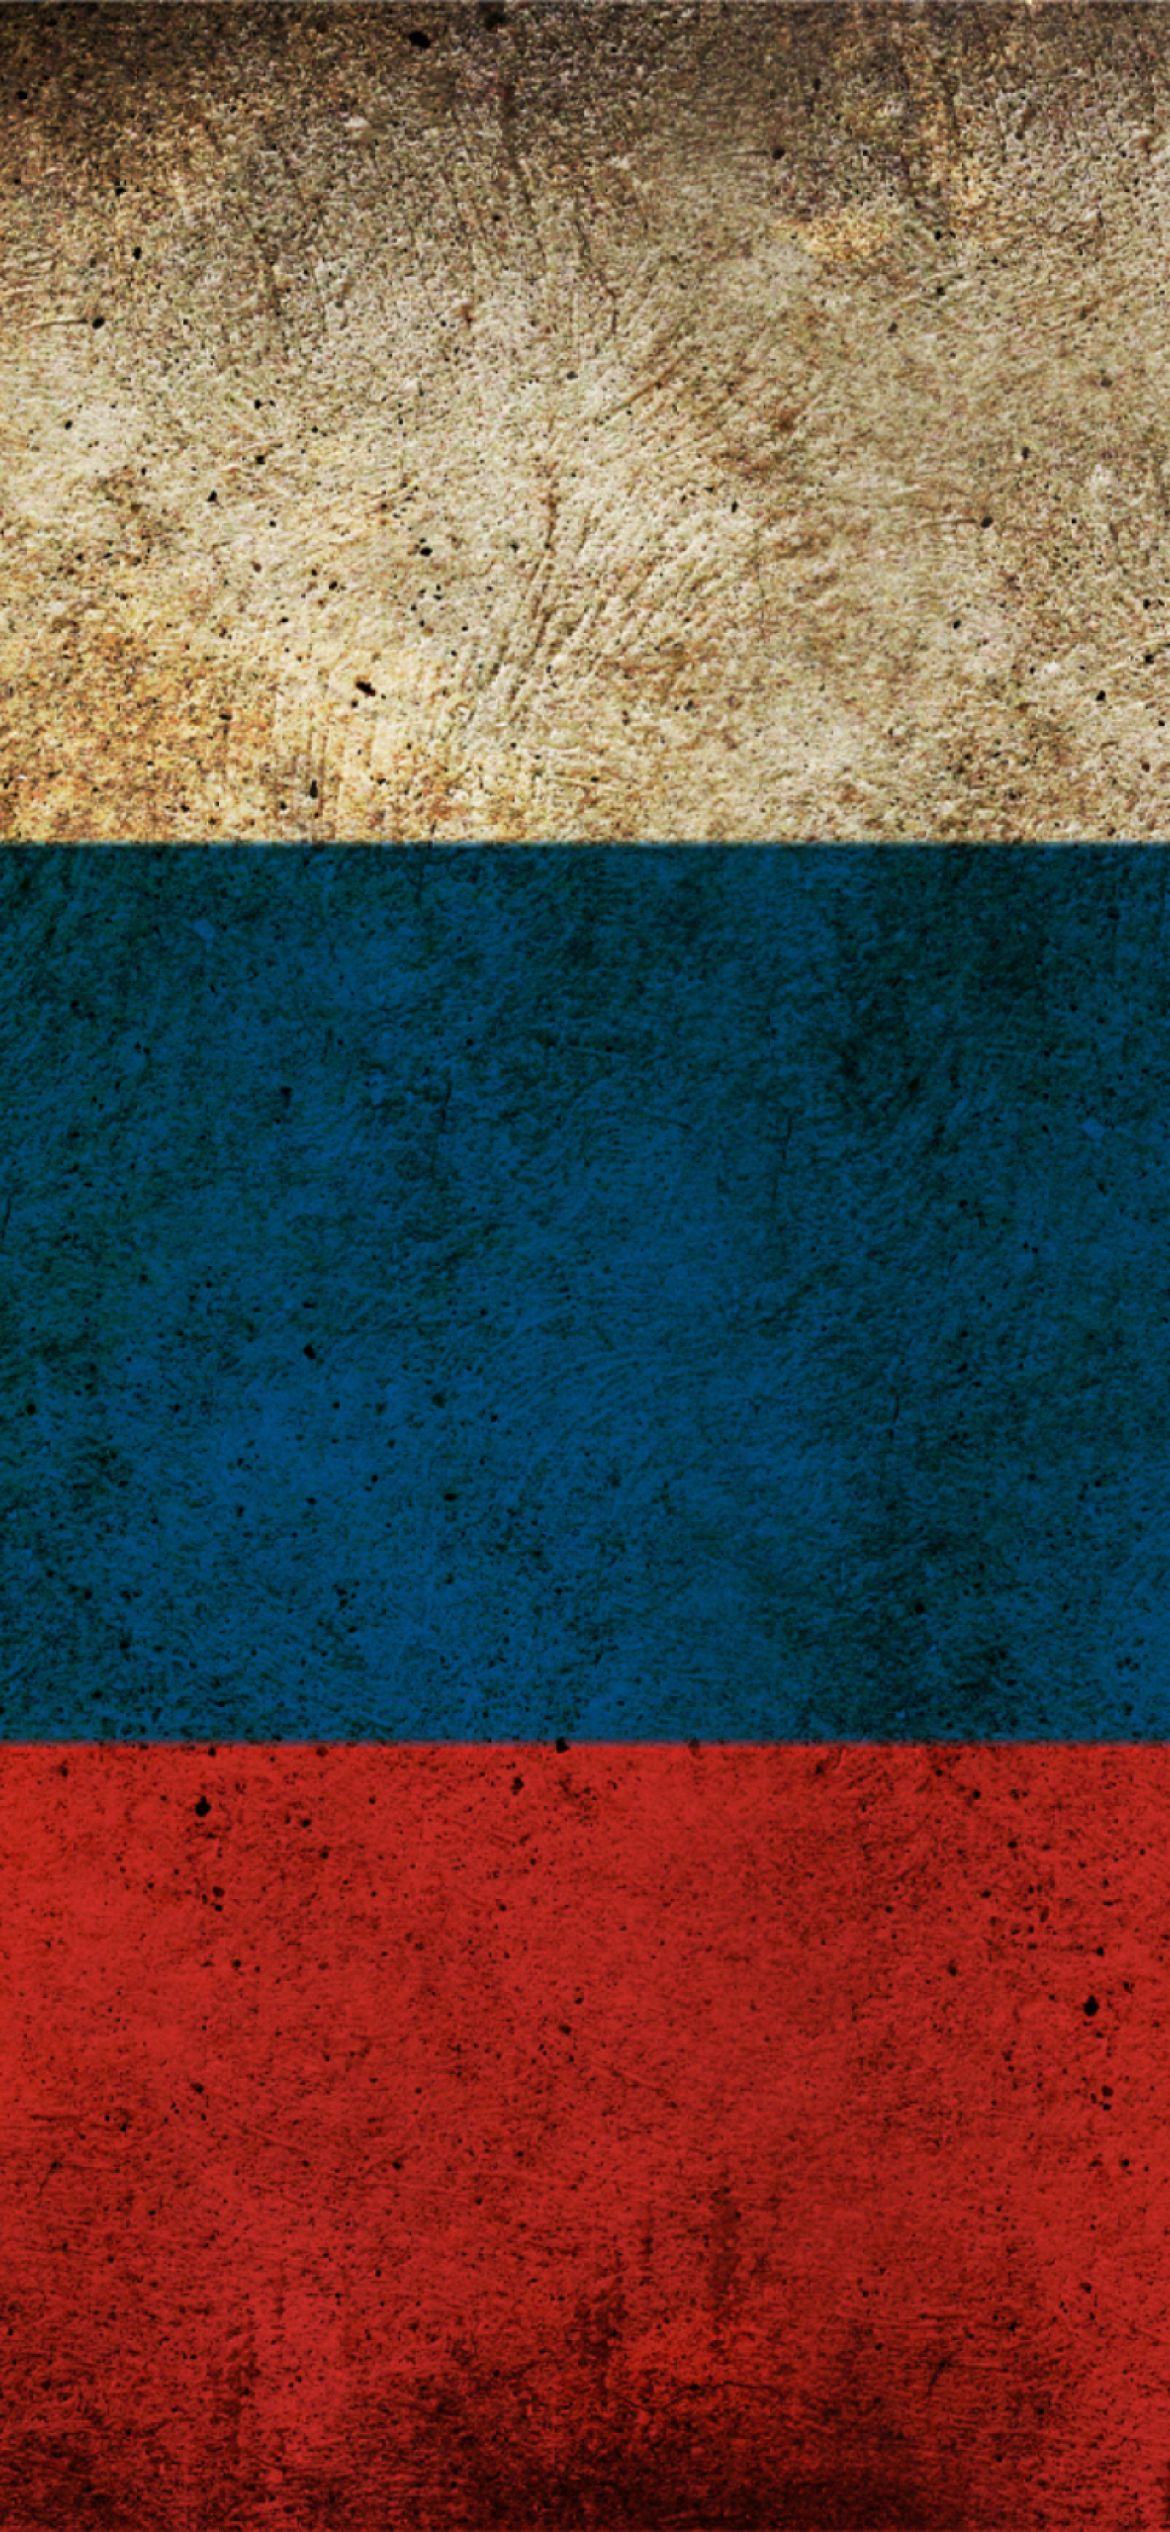 Russian Flag - Flag of Russia wallpaper 1170x2532